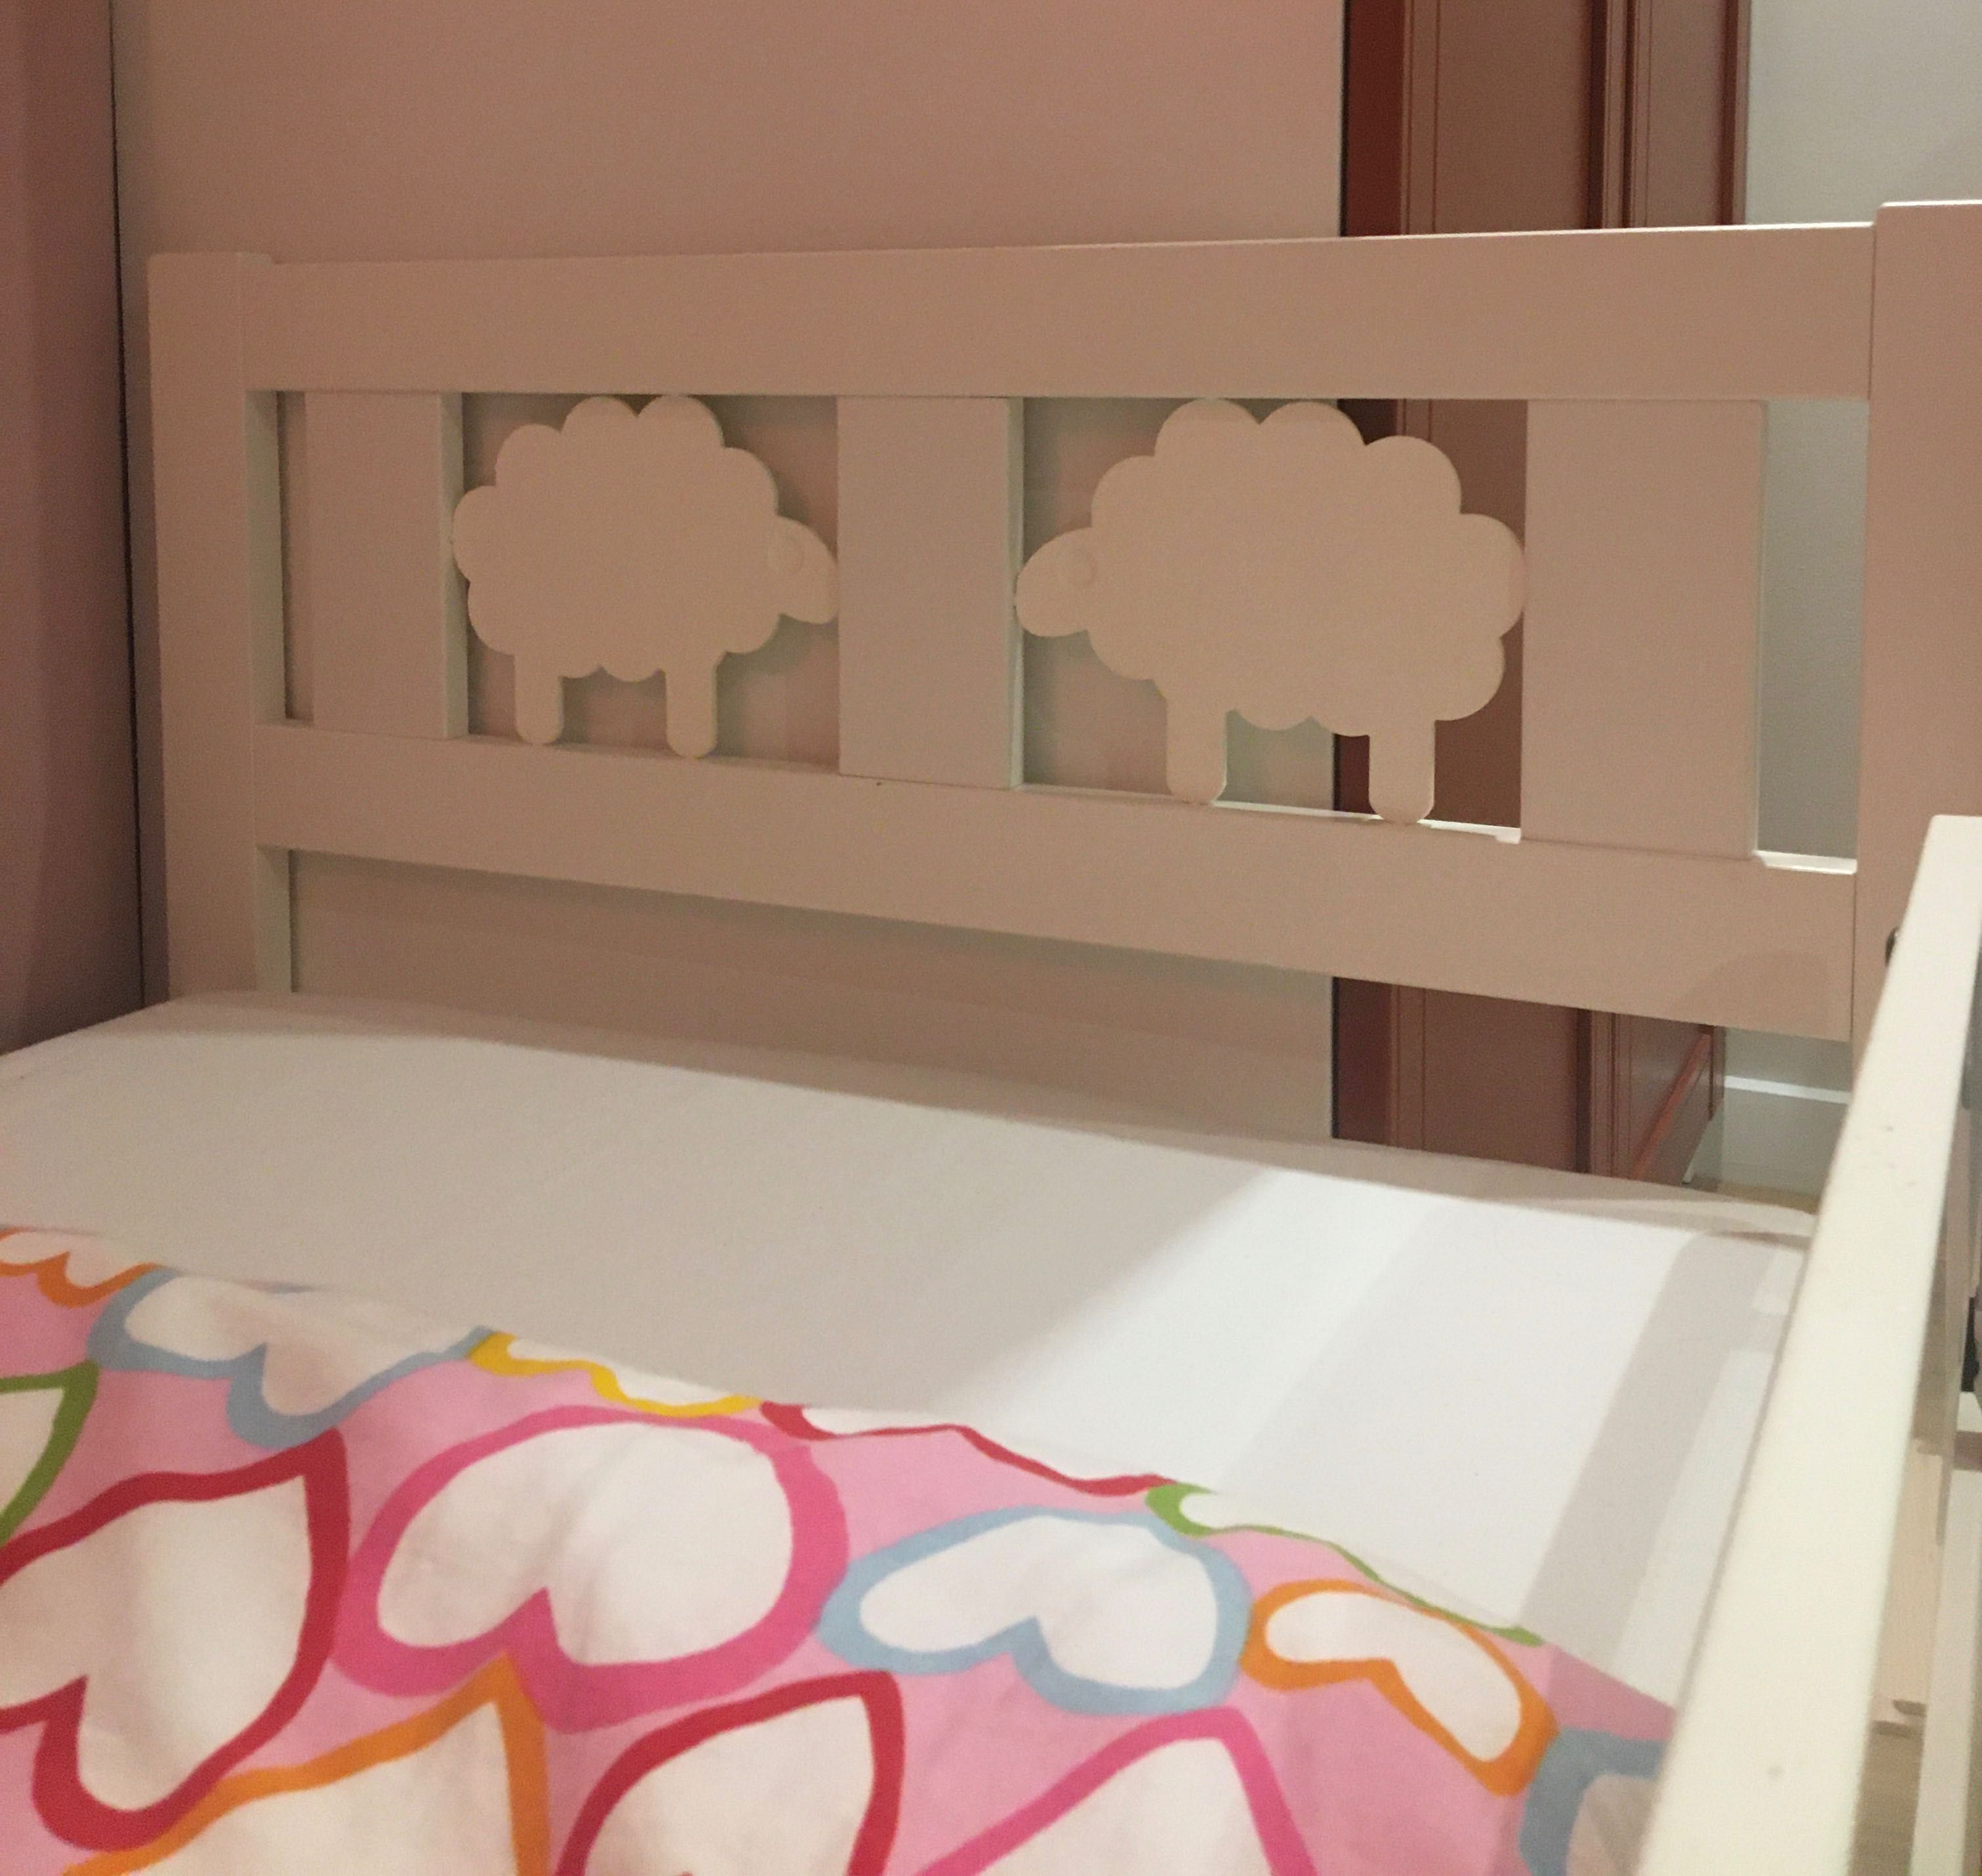 KRITTER
Rama łóżka z barierką, stelażem i materacem, 70x160 cm, ikea